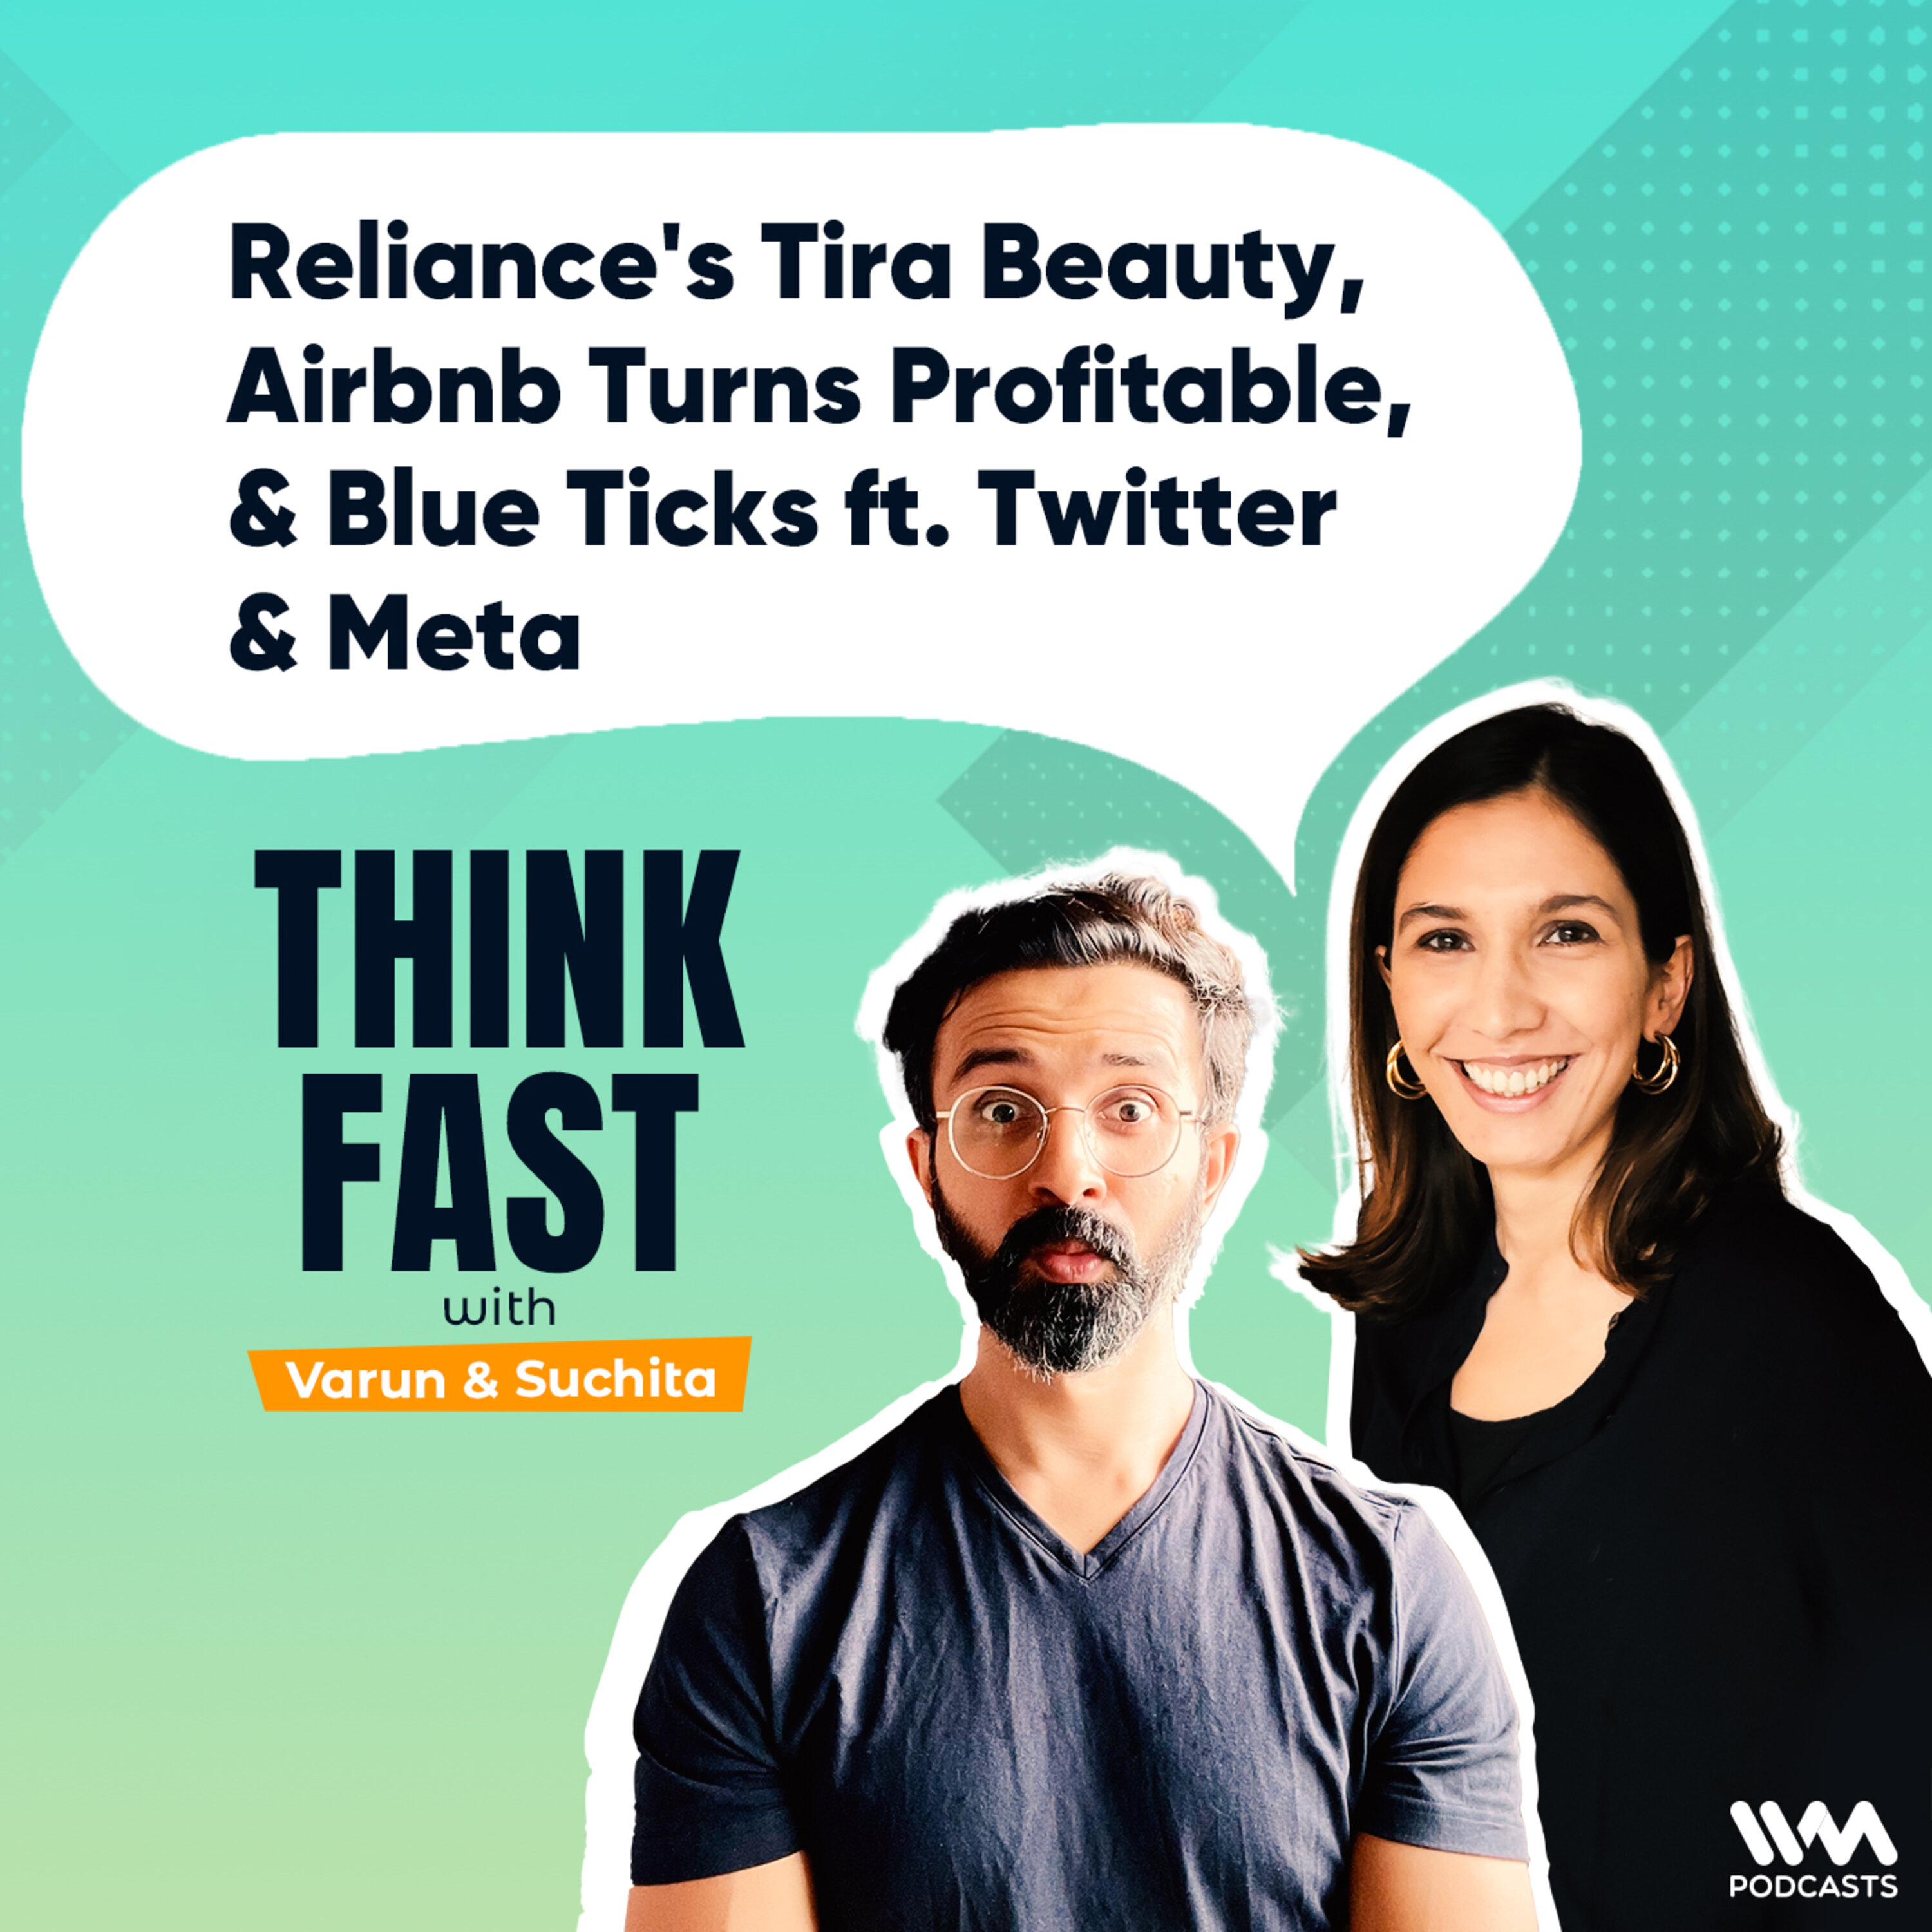 Reliance's Tira Beauty, Airbnb Turns Profitable, & Blue Ticks ft. Twitter & Meta